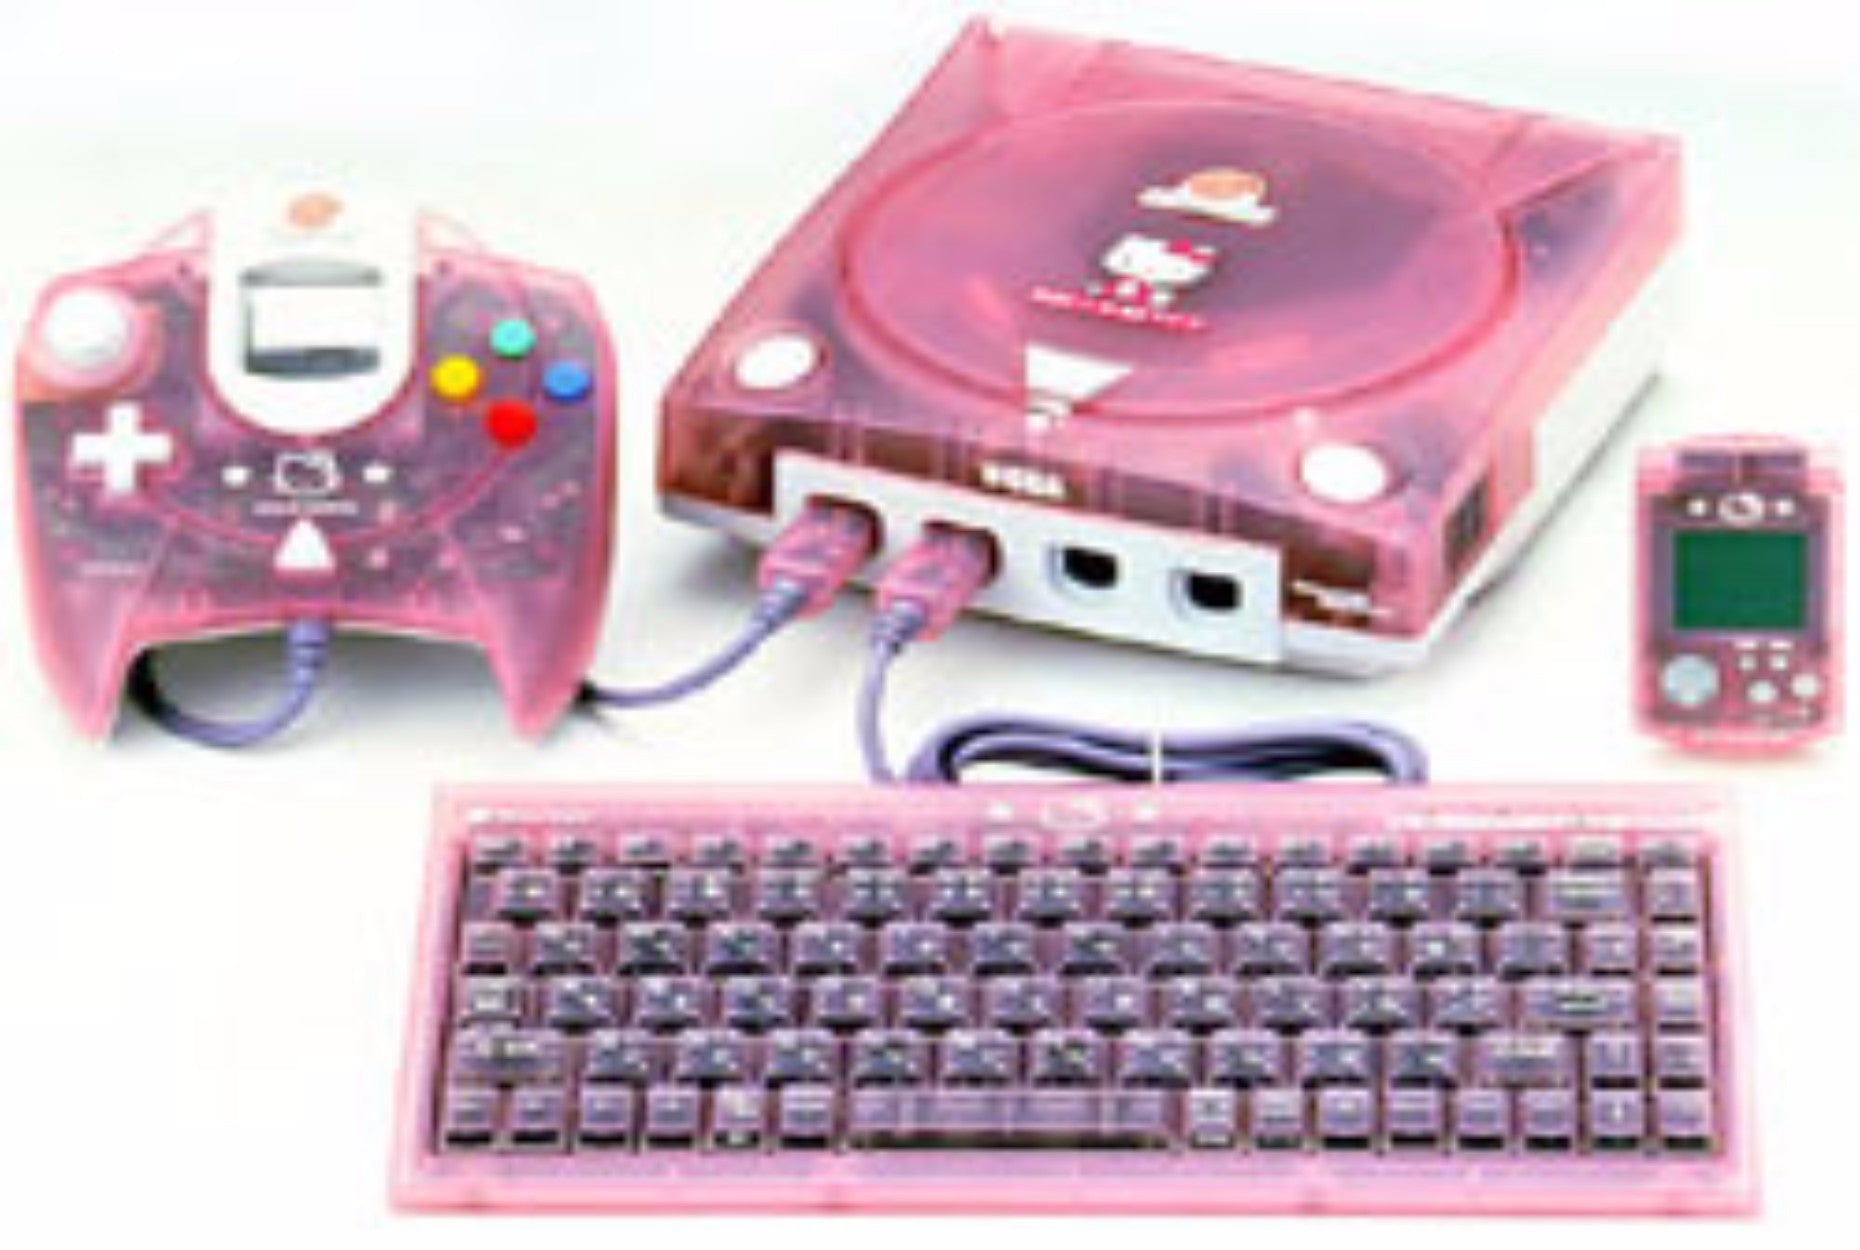 Sega Dreamcast Hello Kitty Retropixl Retrogaming retro gaming Rare Console Collector Limited Edition Japan Import